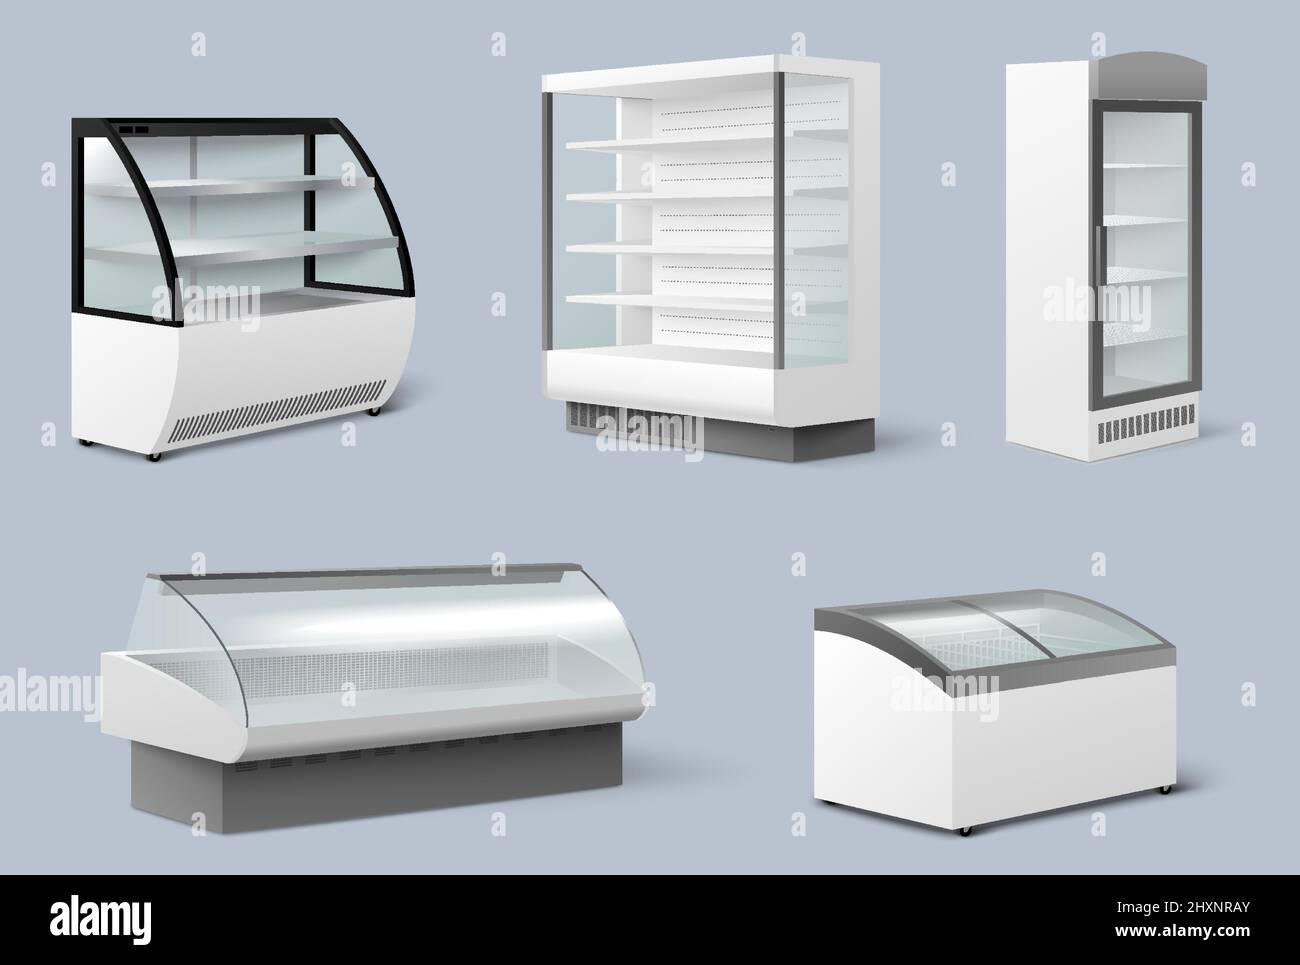 Commercial display refrigerator mockup set, vector illustration. Empty retail fridge for supermarket or grocery store. Stock Vector